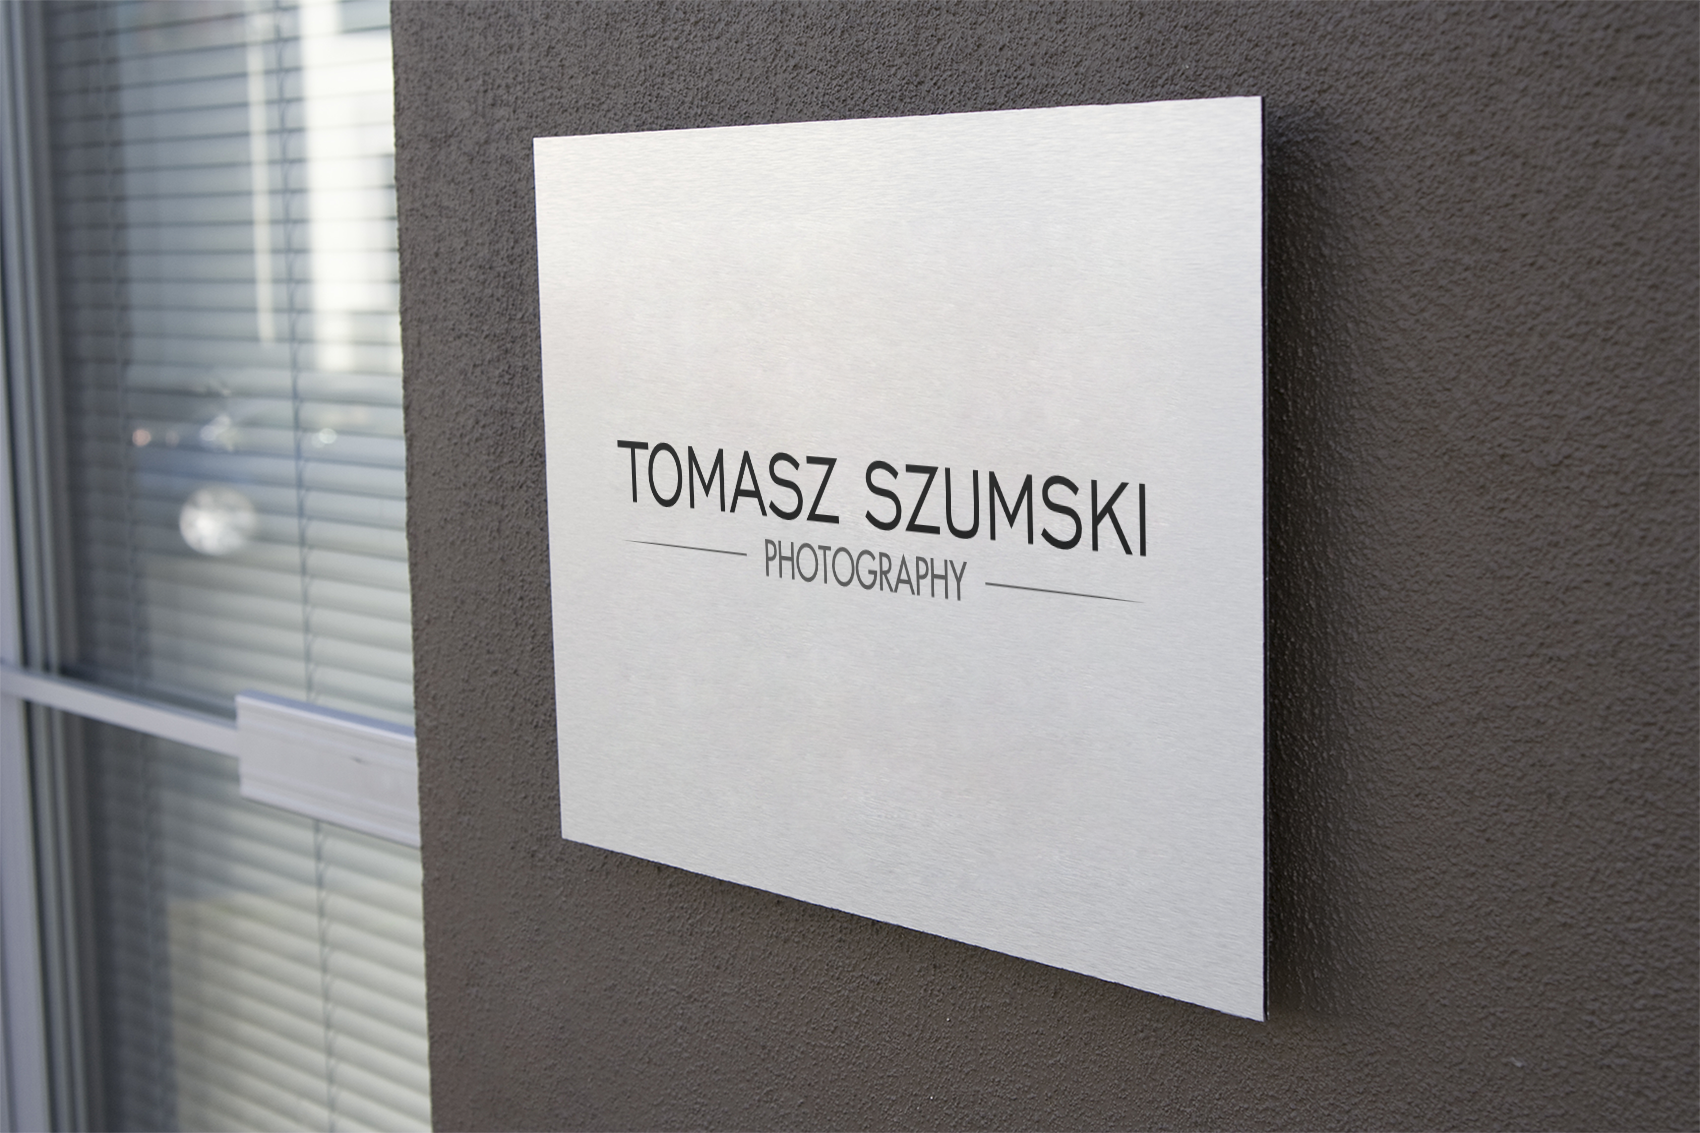 Tomasz Szumski Photography